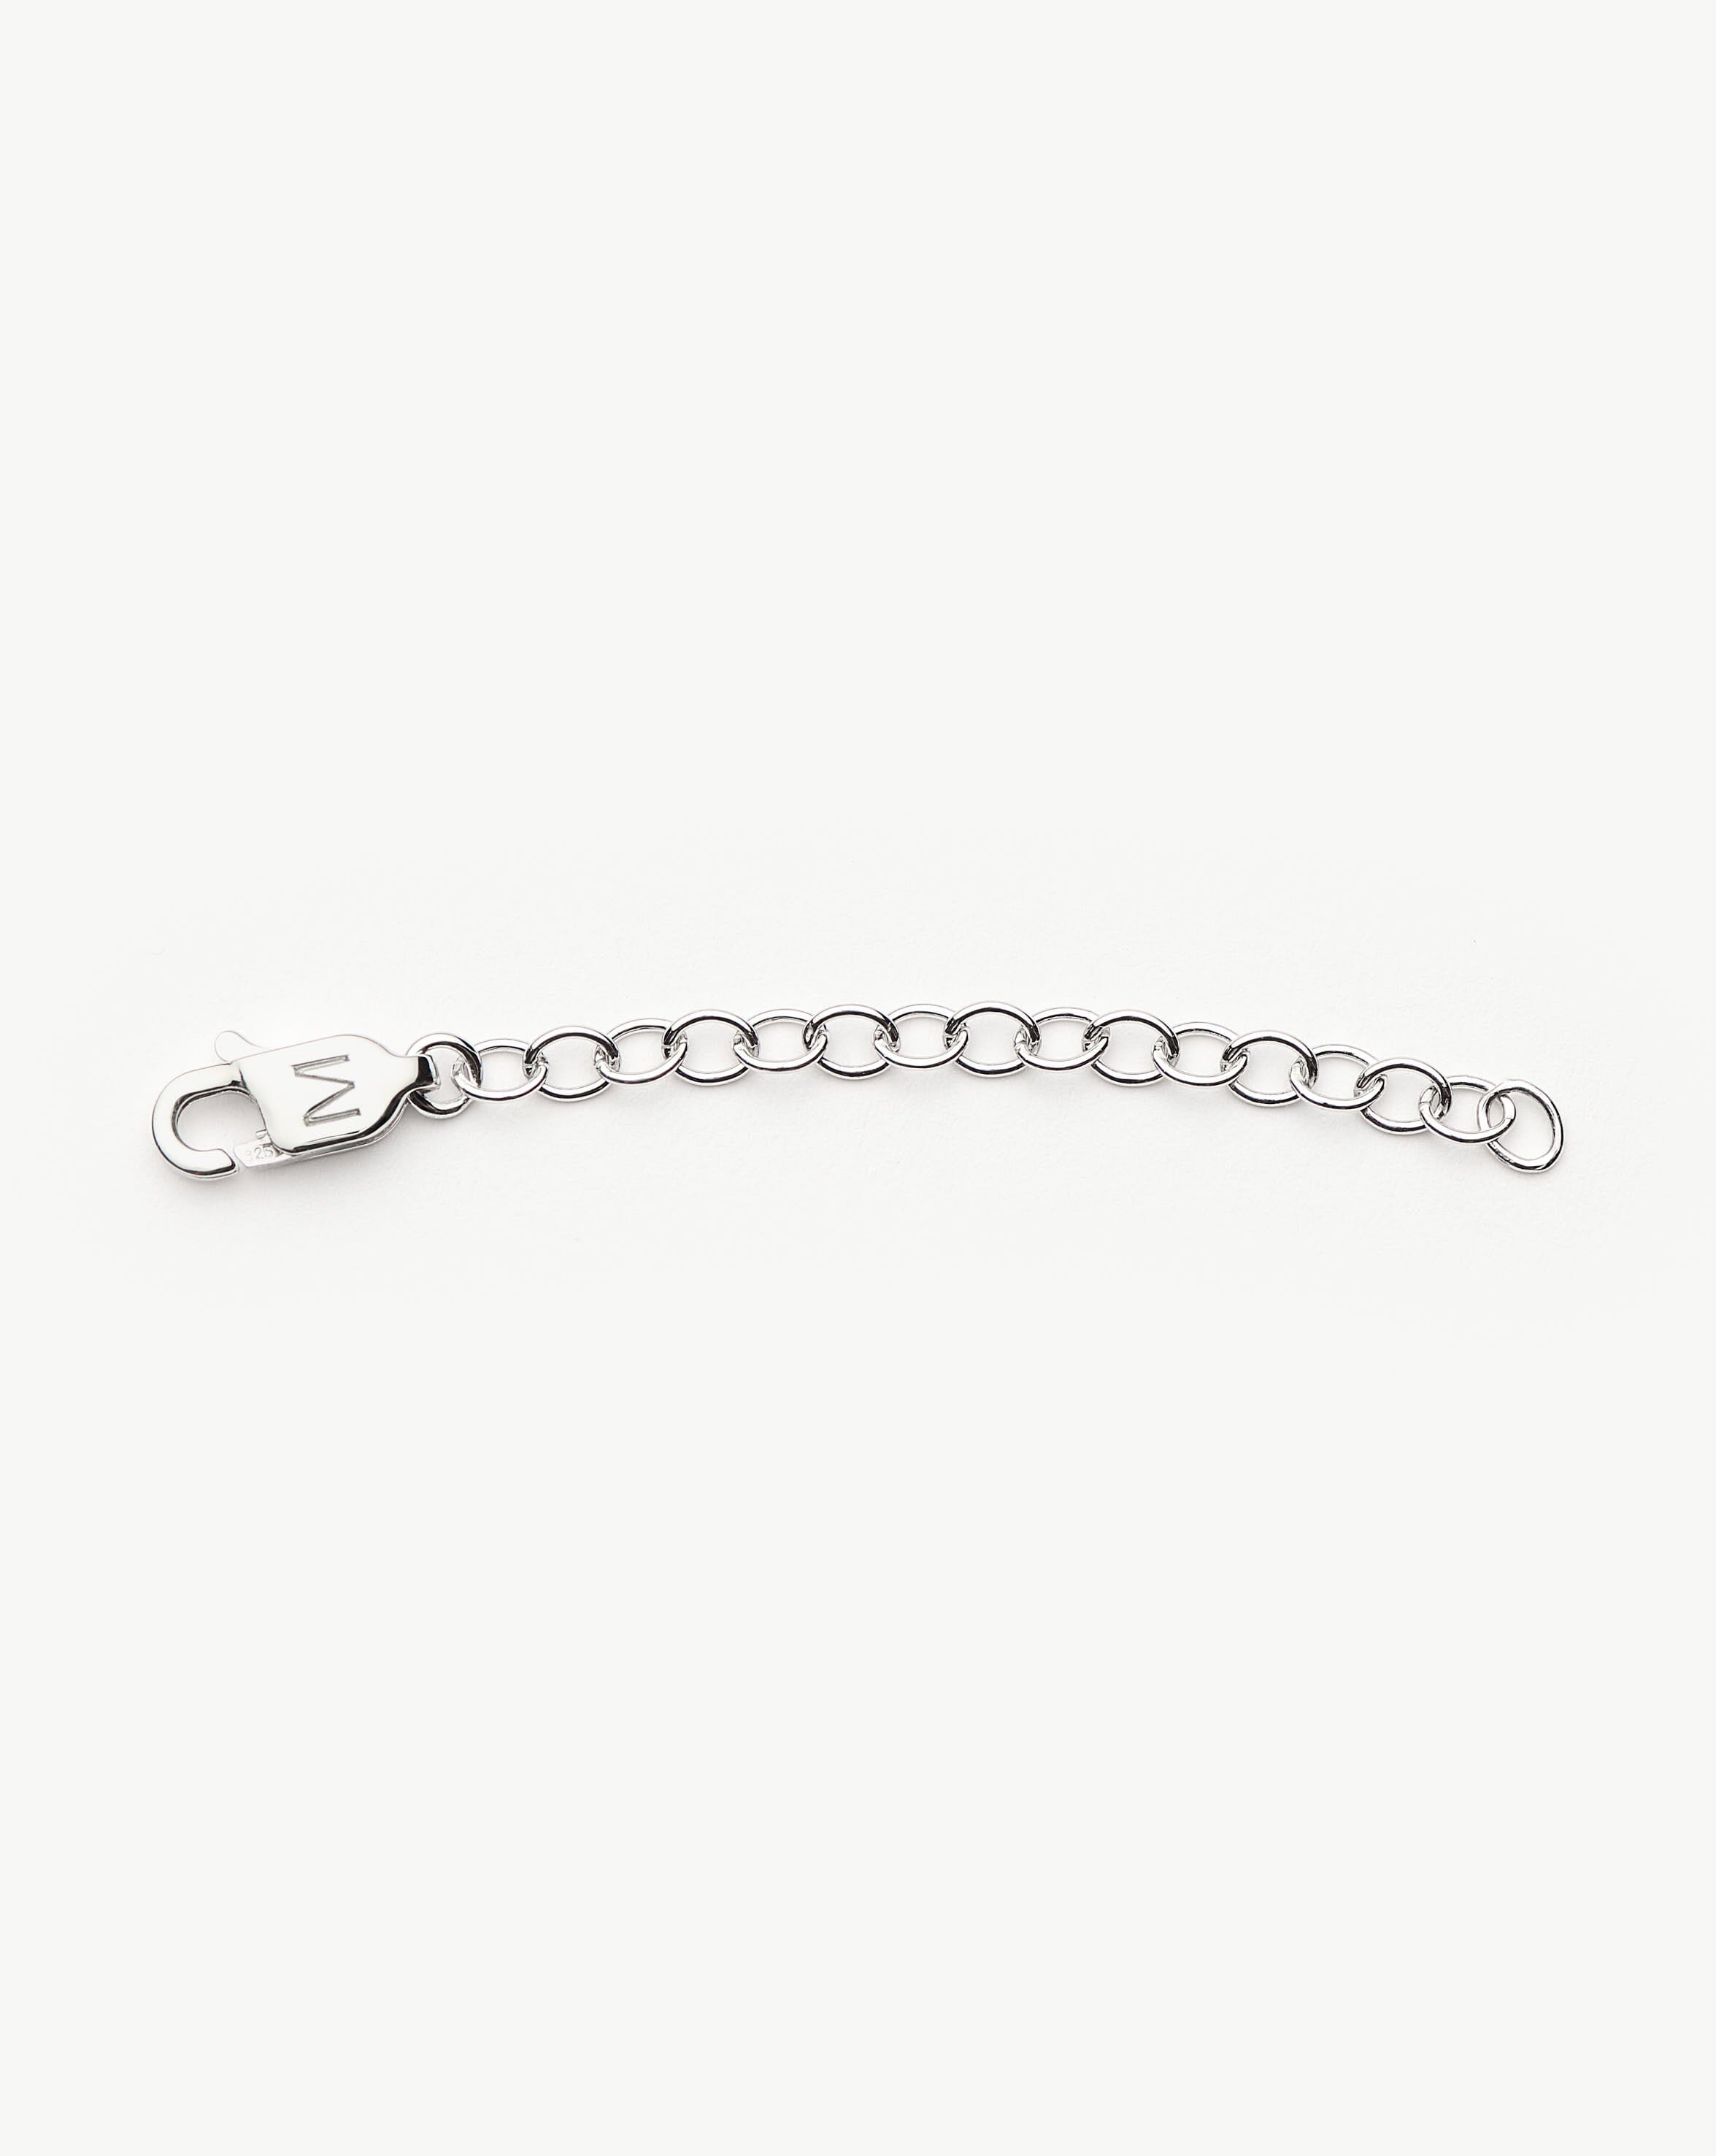 Adjustable Chain Necklace Extender | Sterling Silver Extender Missoma 